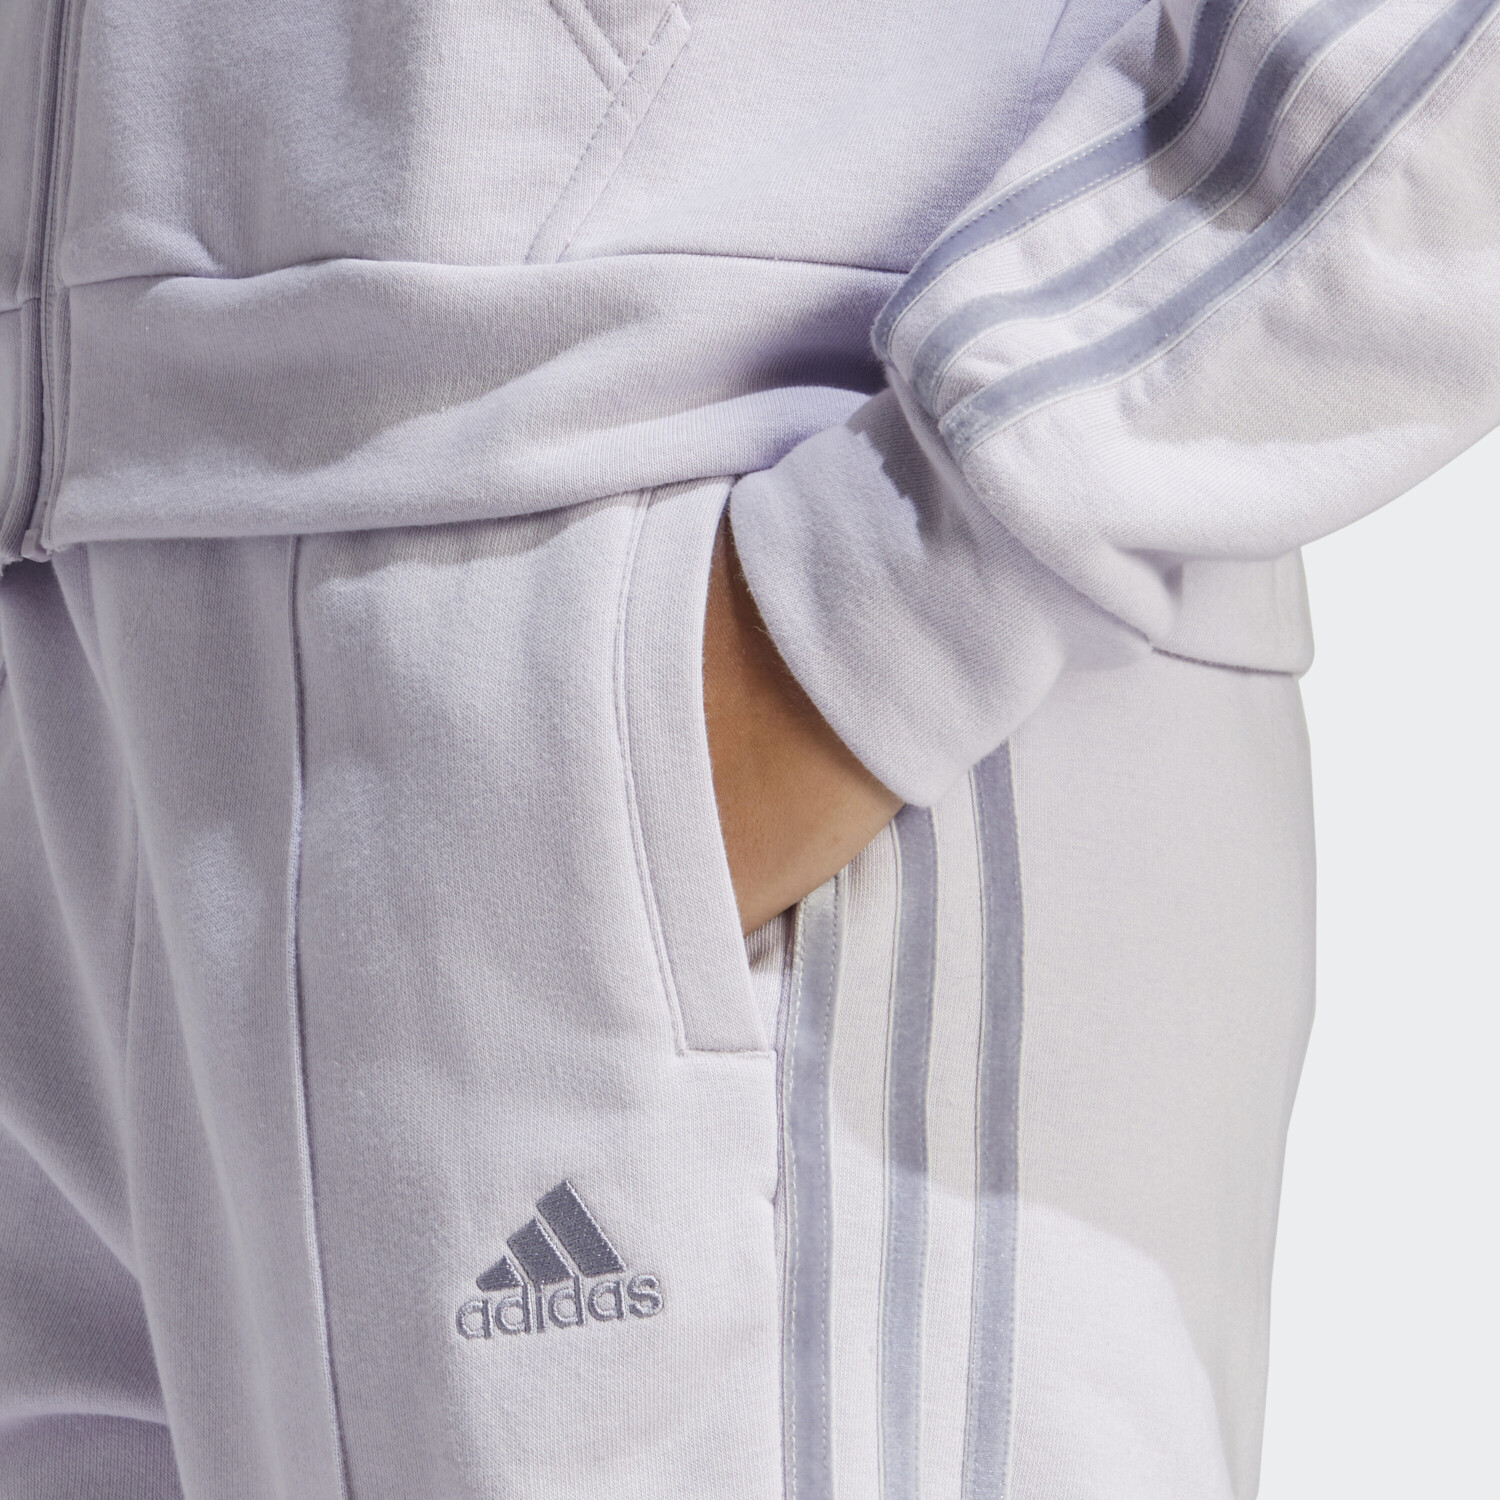 spontaan Schuur pak Adidas Energize Trainingsanzug Damen medium grey heather ab 53,99 € |  Preisvergleich bei idealo.de